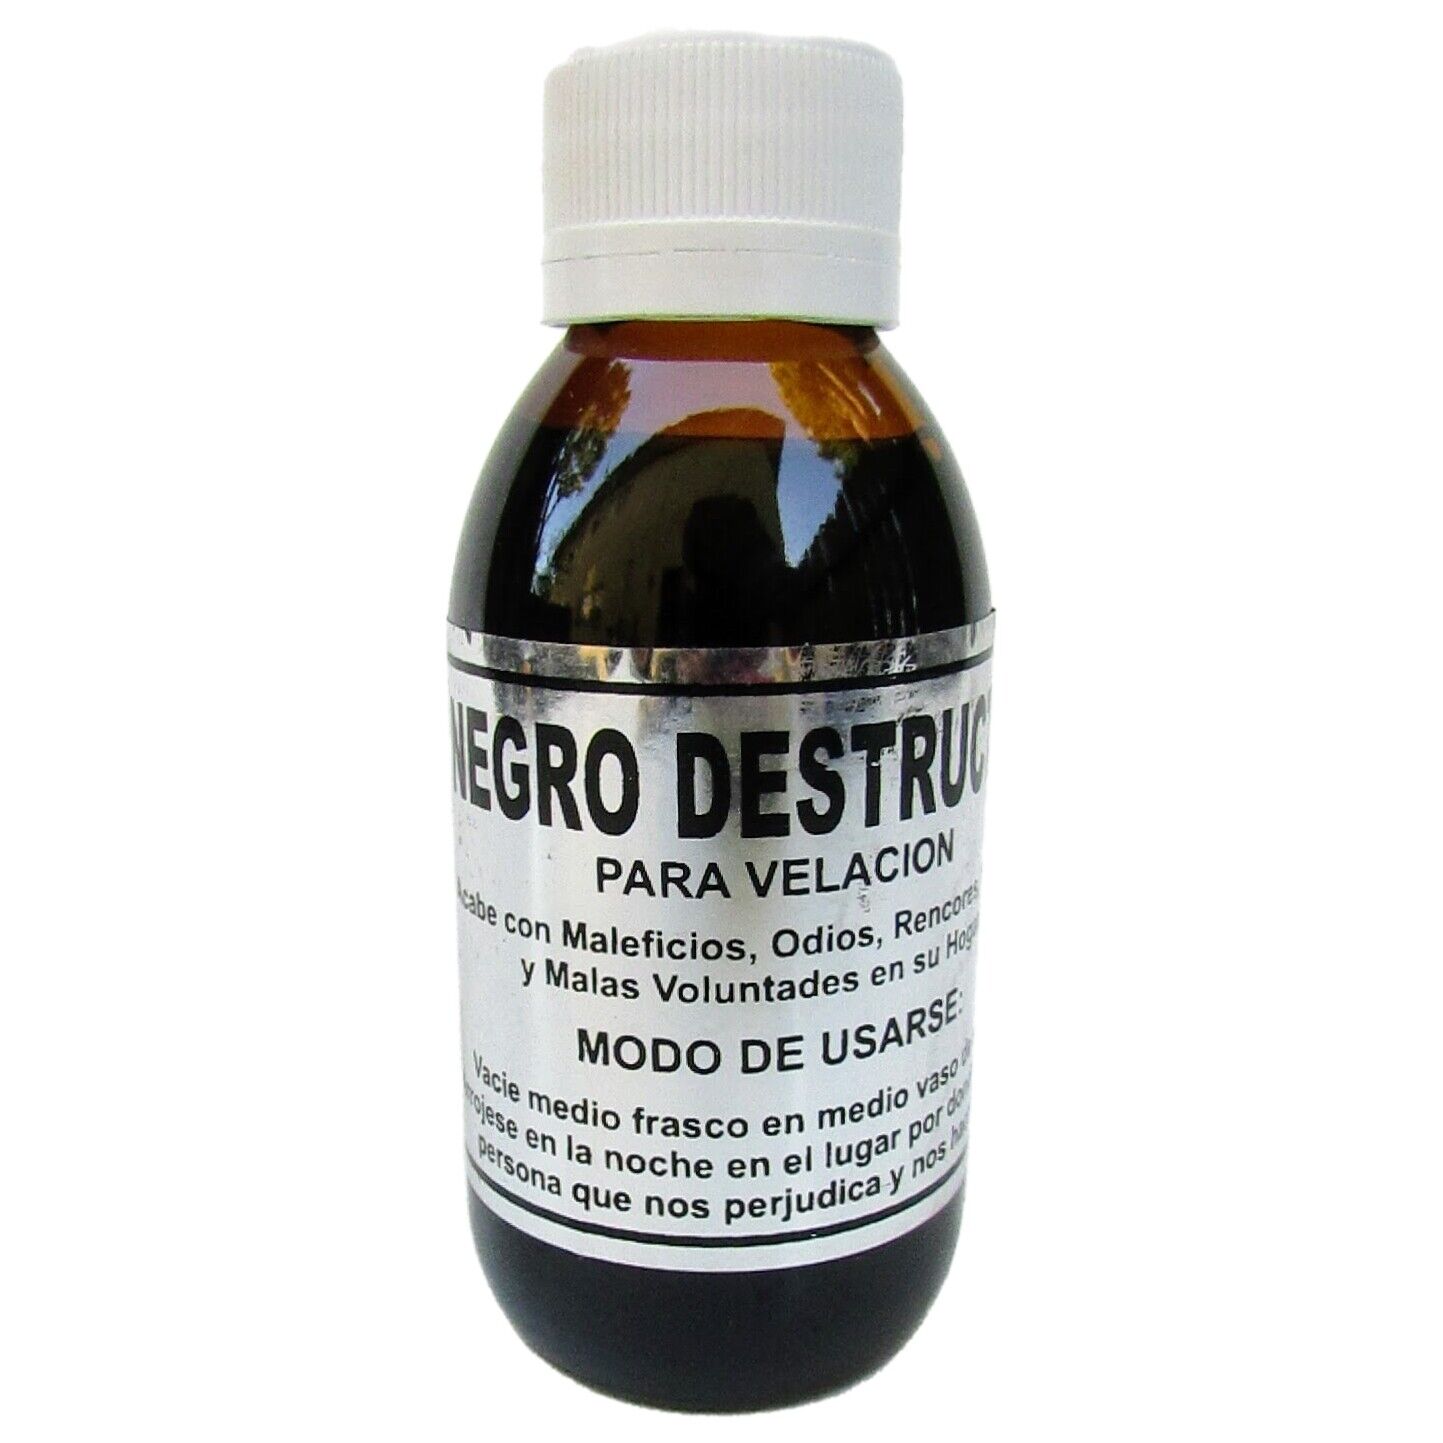 Aceite Negro Destructor Para Velaccion 118 ml / Black Destroyer Oil 4 oz